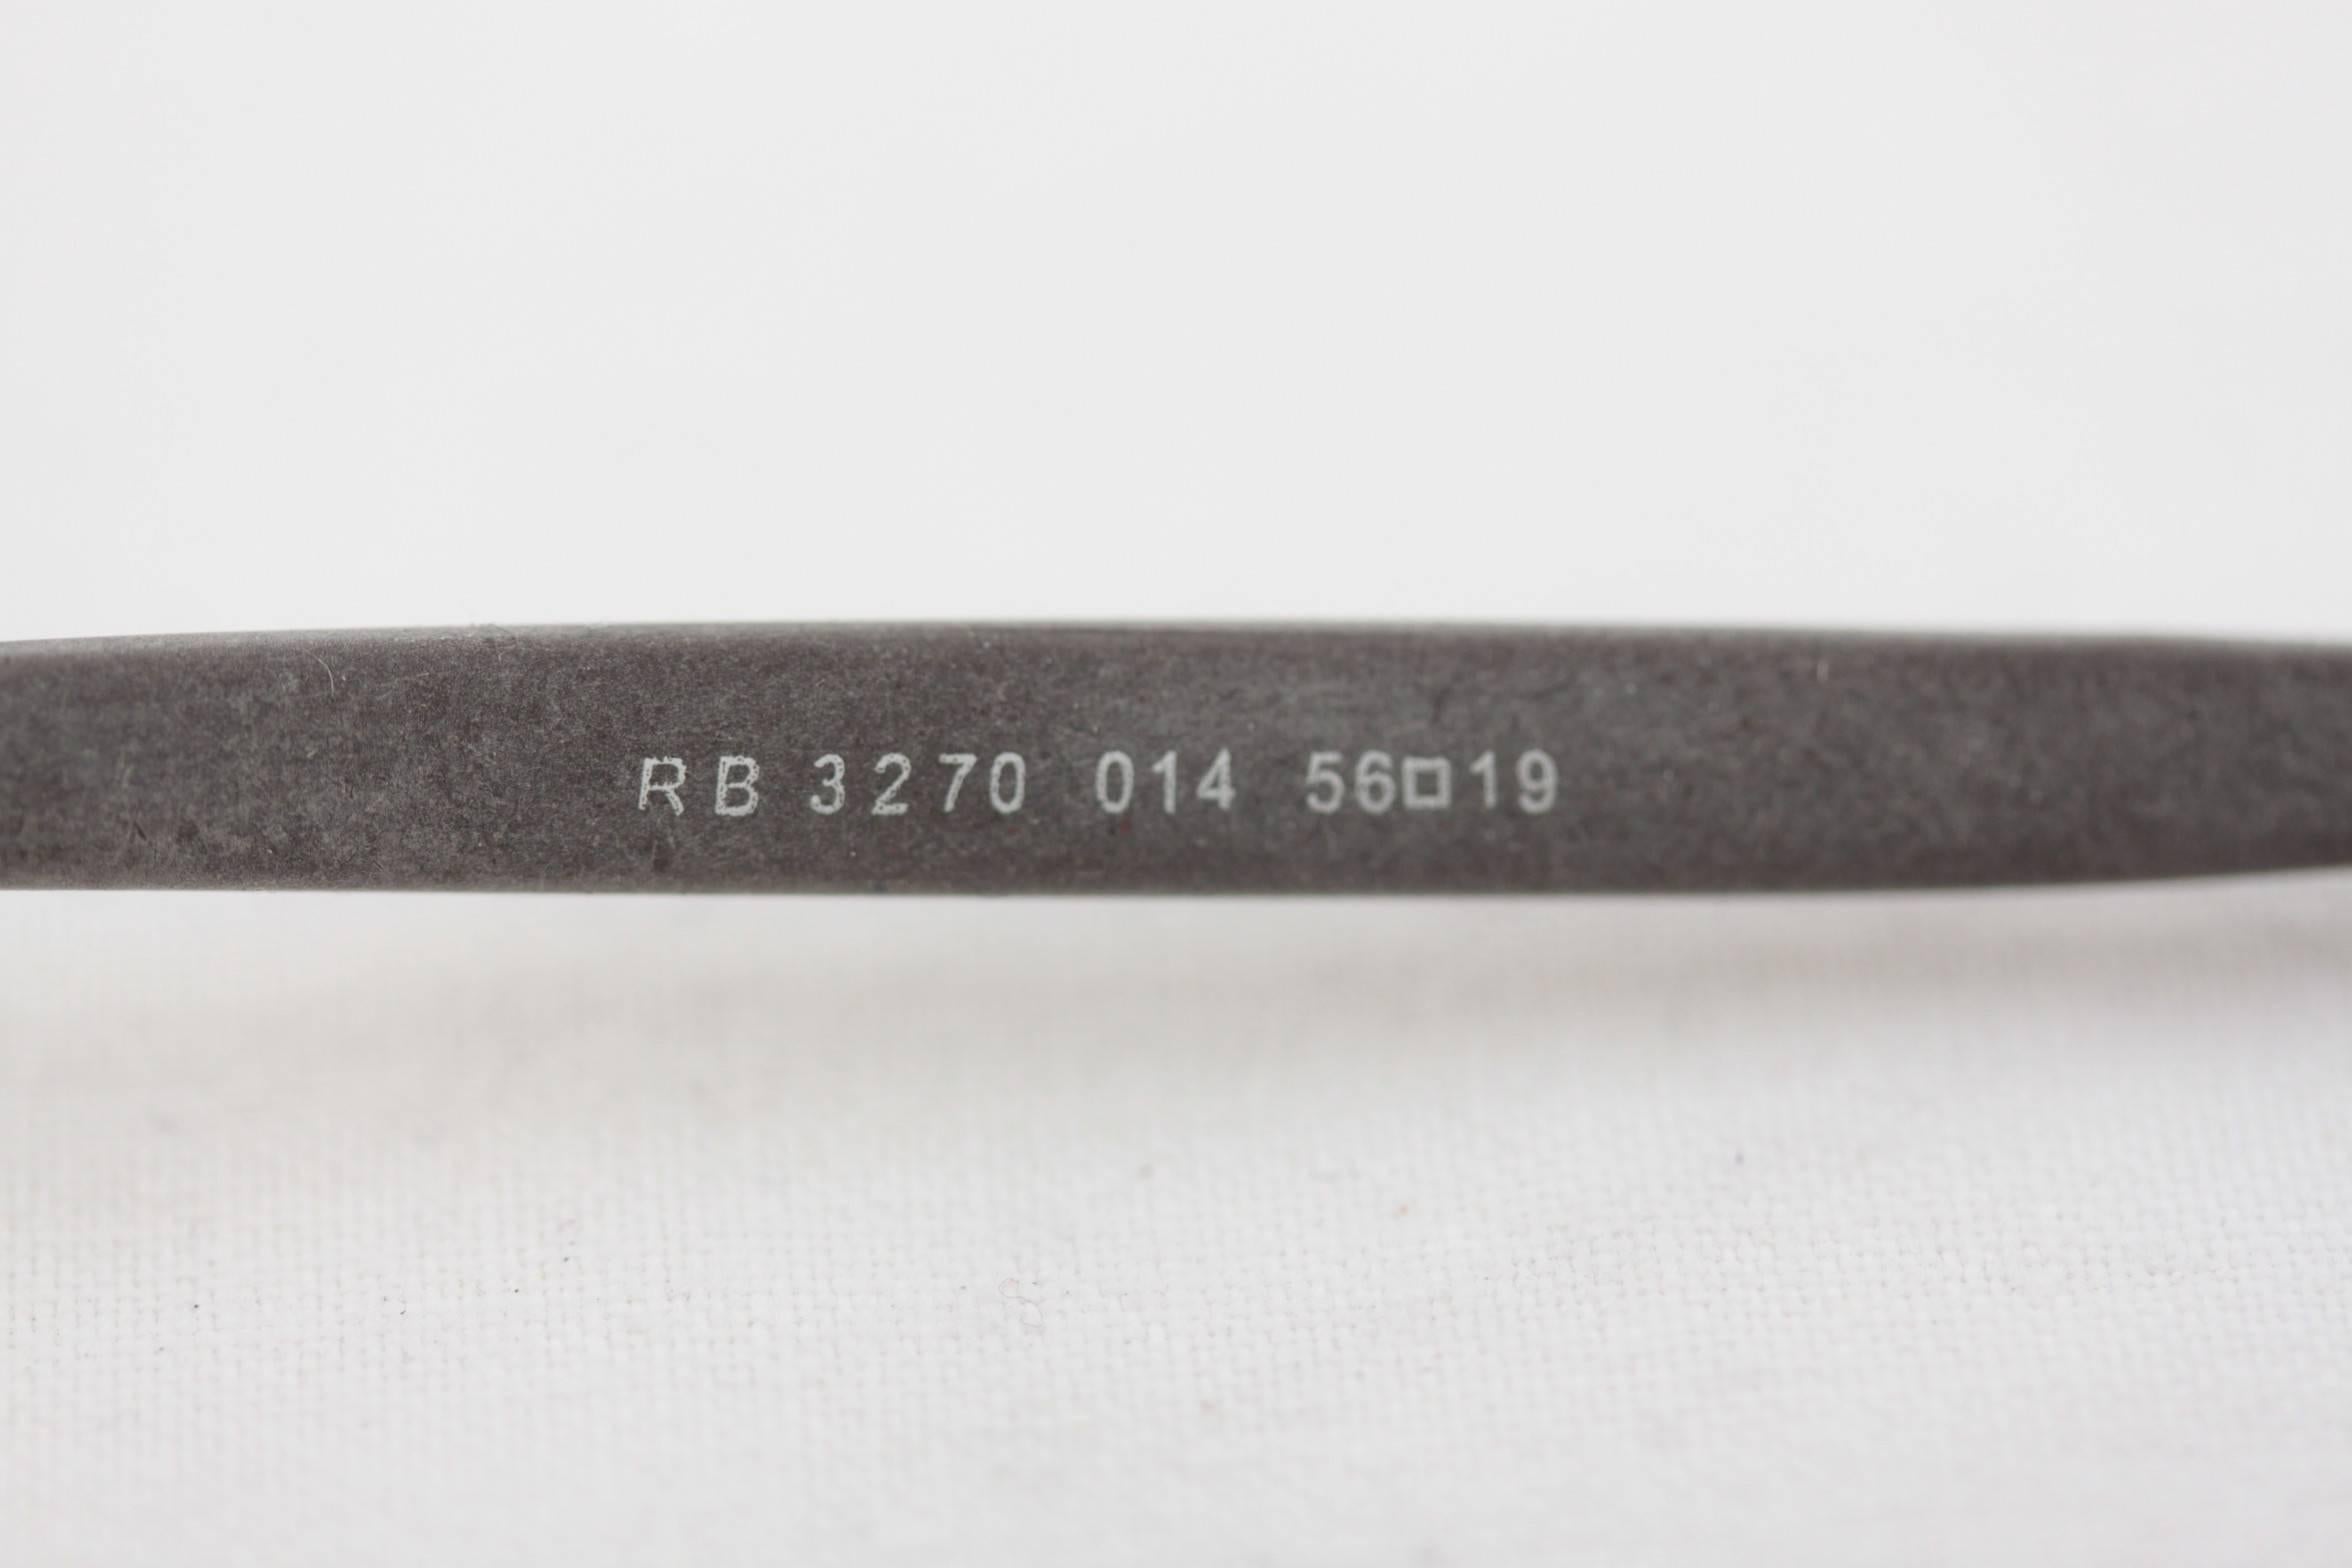 RAY-BAN Brown Metal Unisex MINT SUNGLASSES RB3270 014 56mm B15 Lens 1